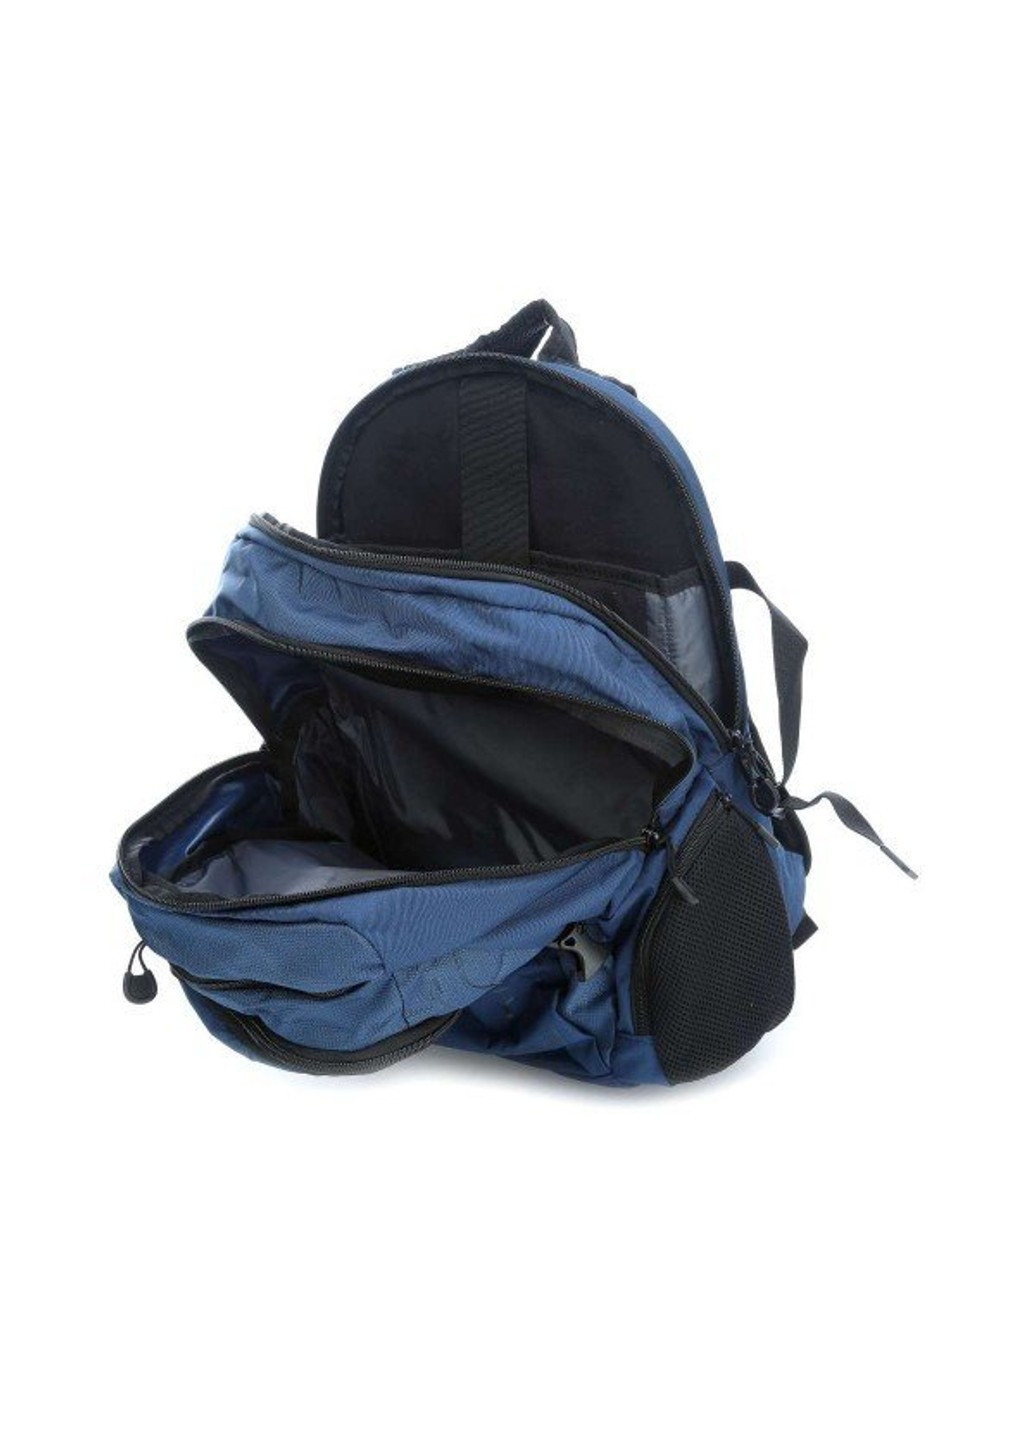 Синий рюкзак VX SPORT Pilot/Blue Vt311052.09 Victorinox Travel (262449729)